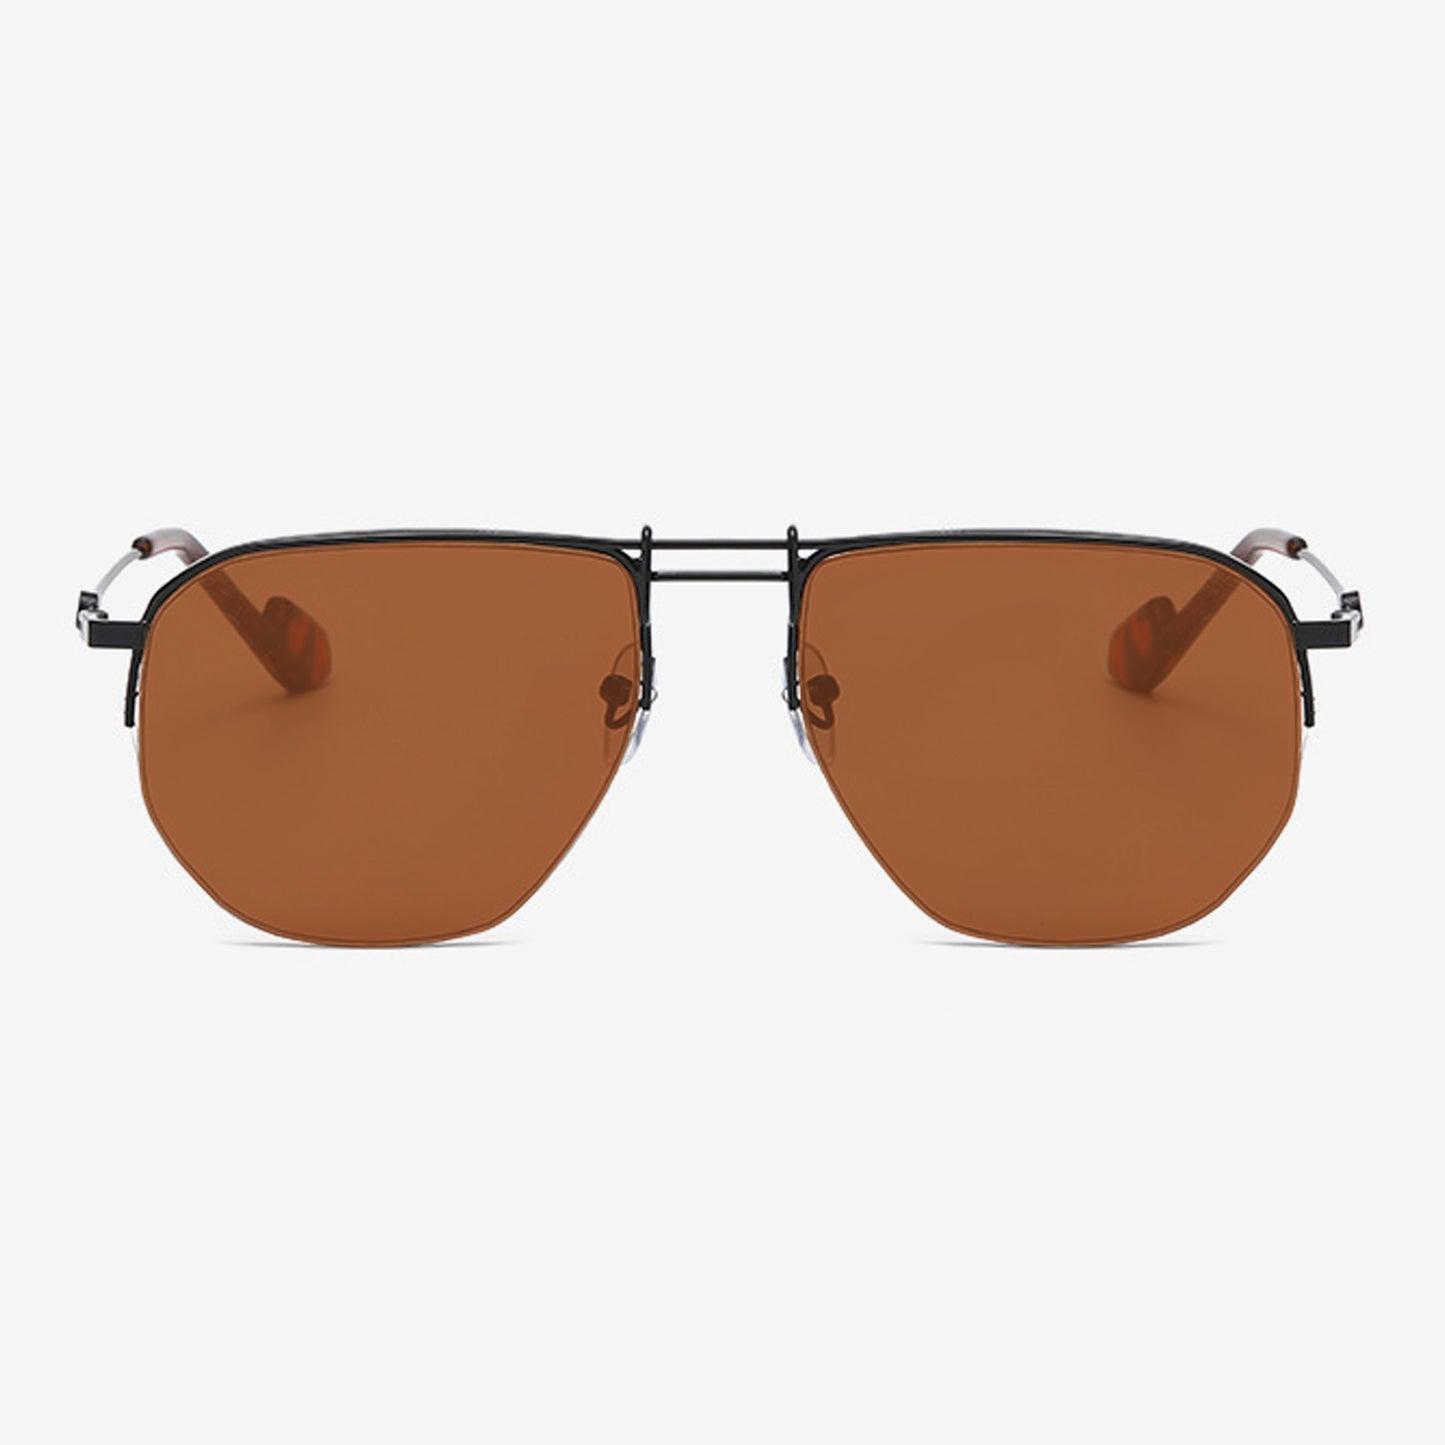 Optular Stylish Black Brown unisex Sunglasses